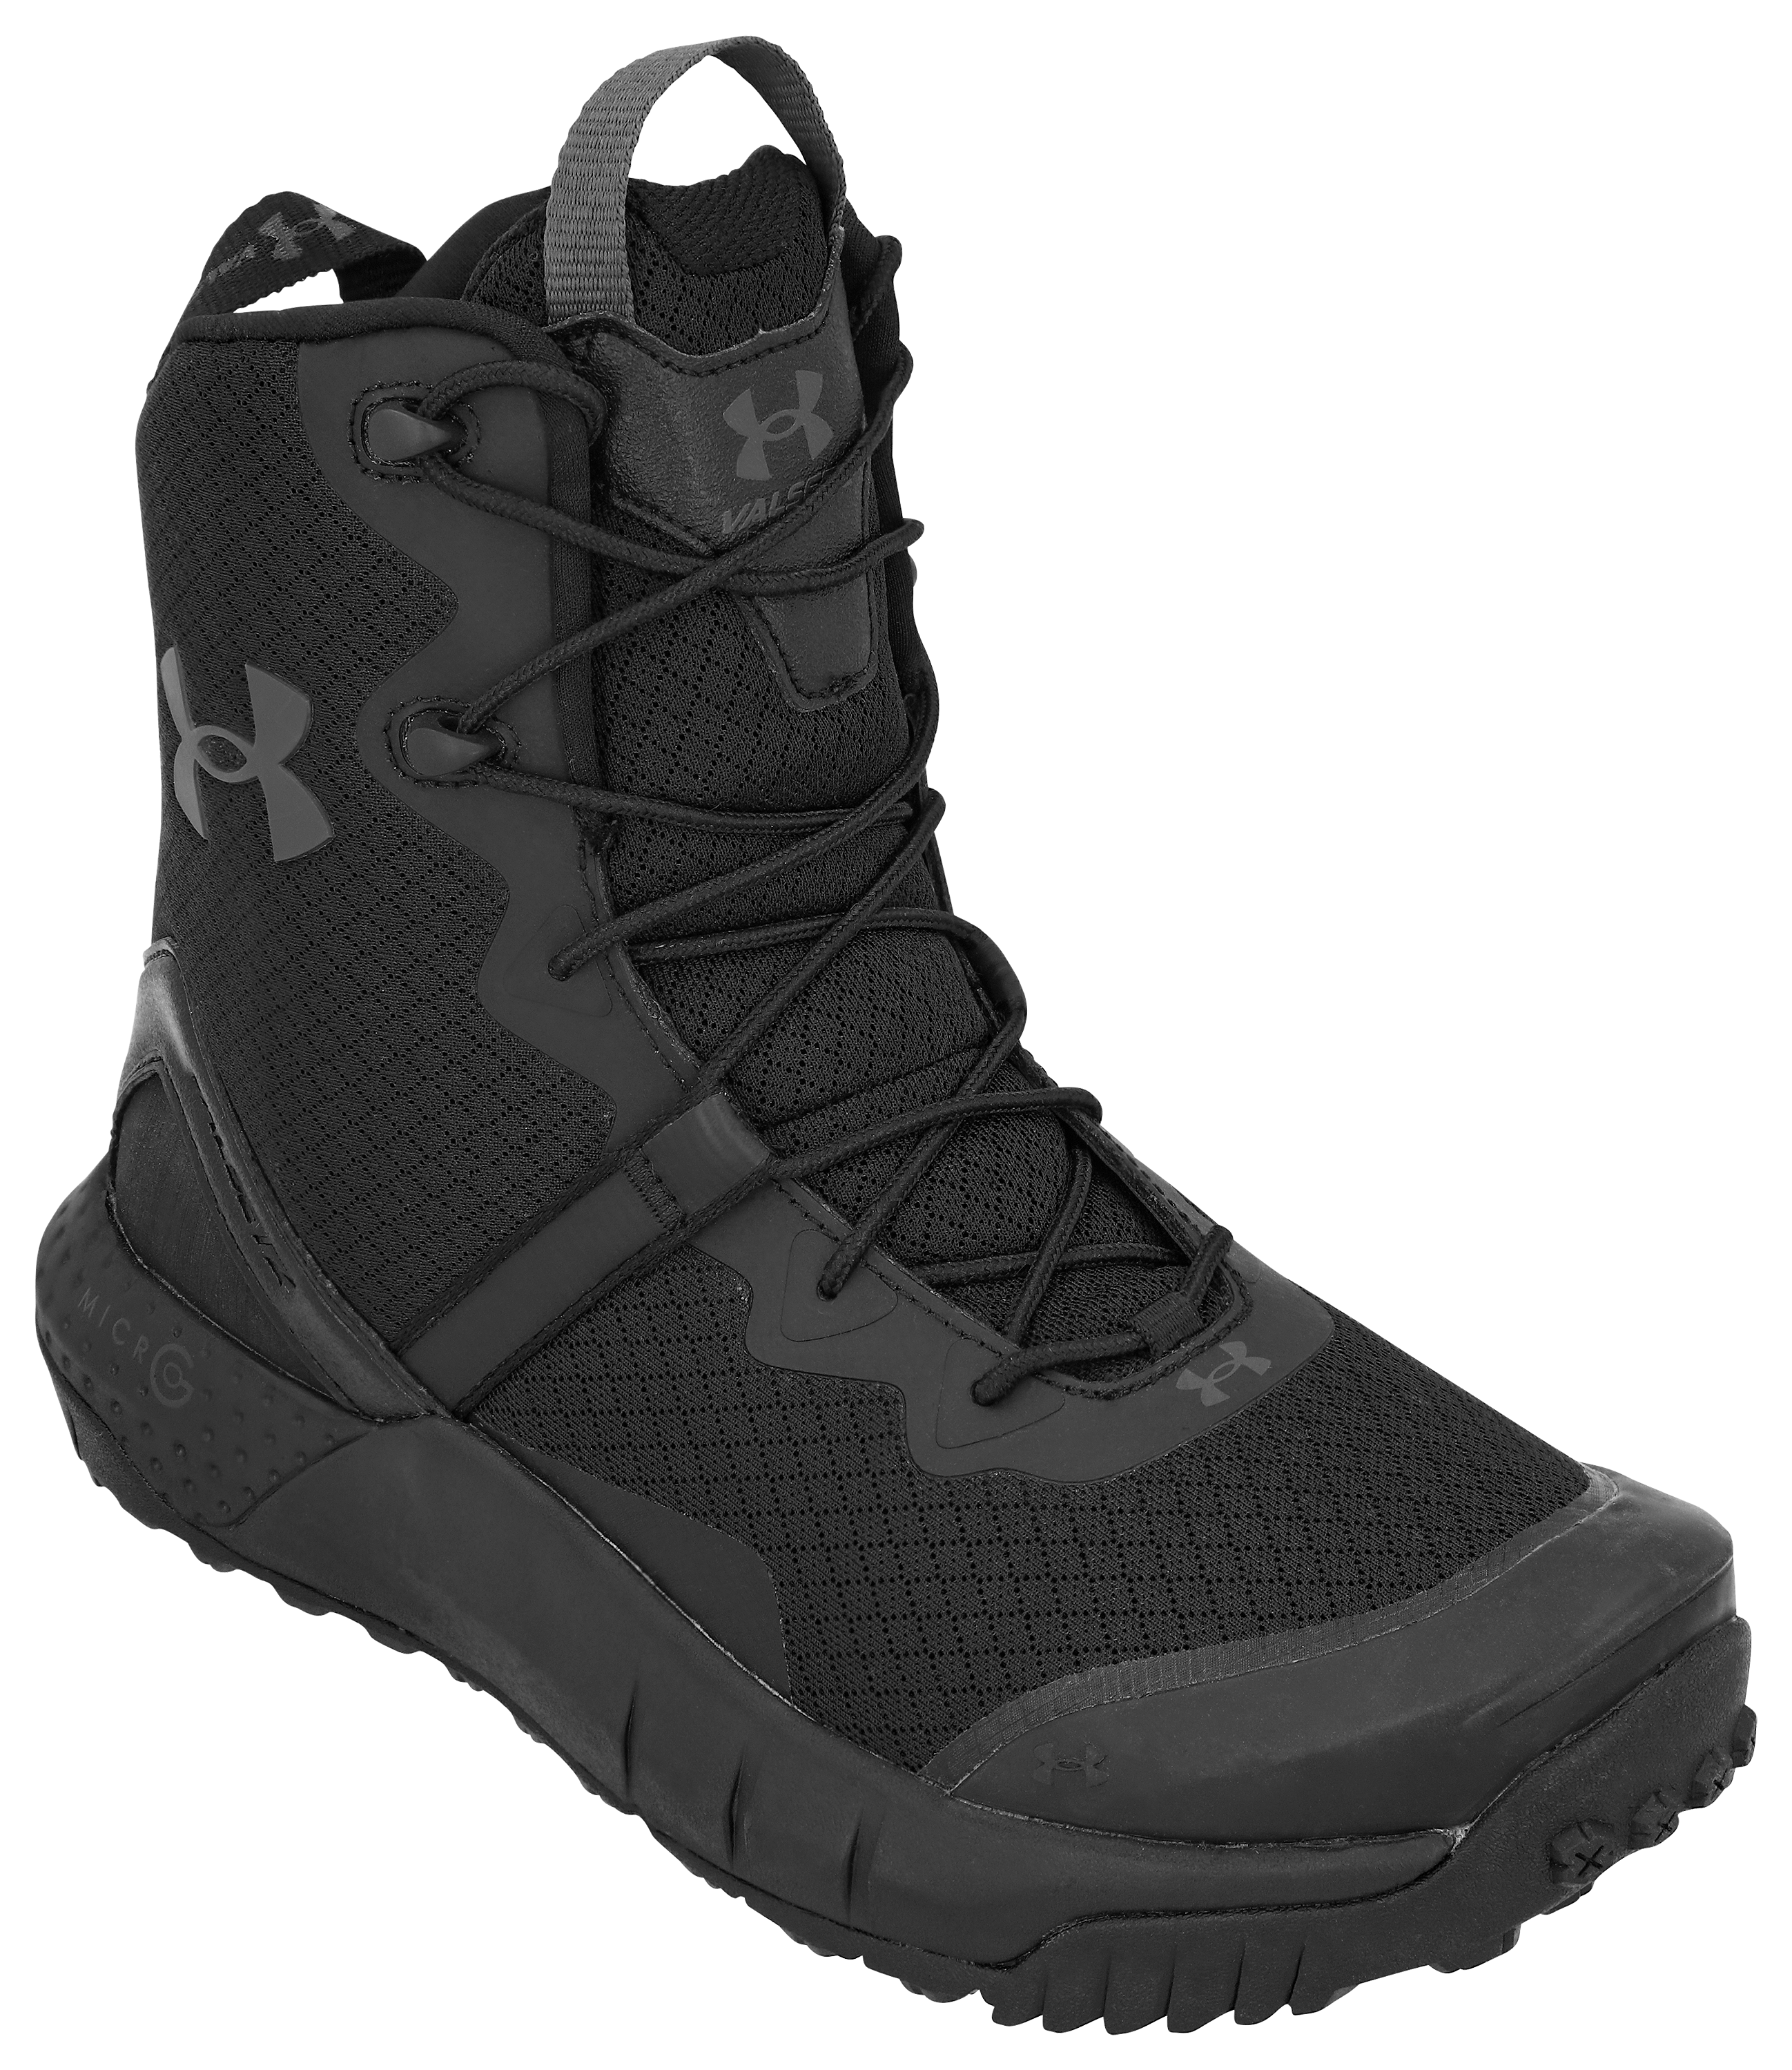 Under Armour Micro G Valsetz Side Zip Tactical Boots for Men - Black - 11M